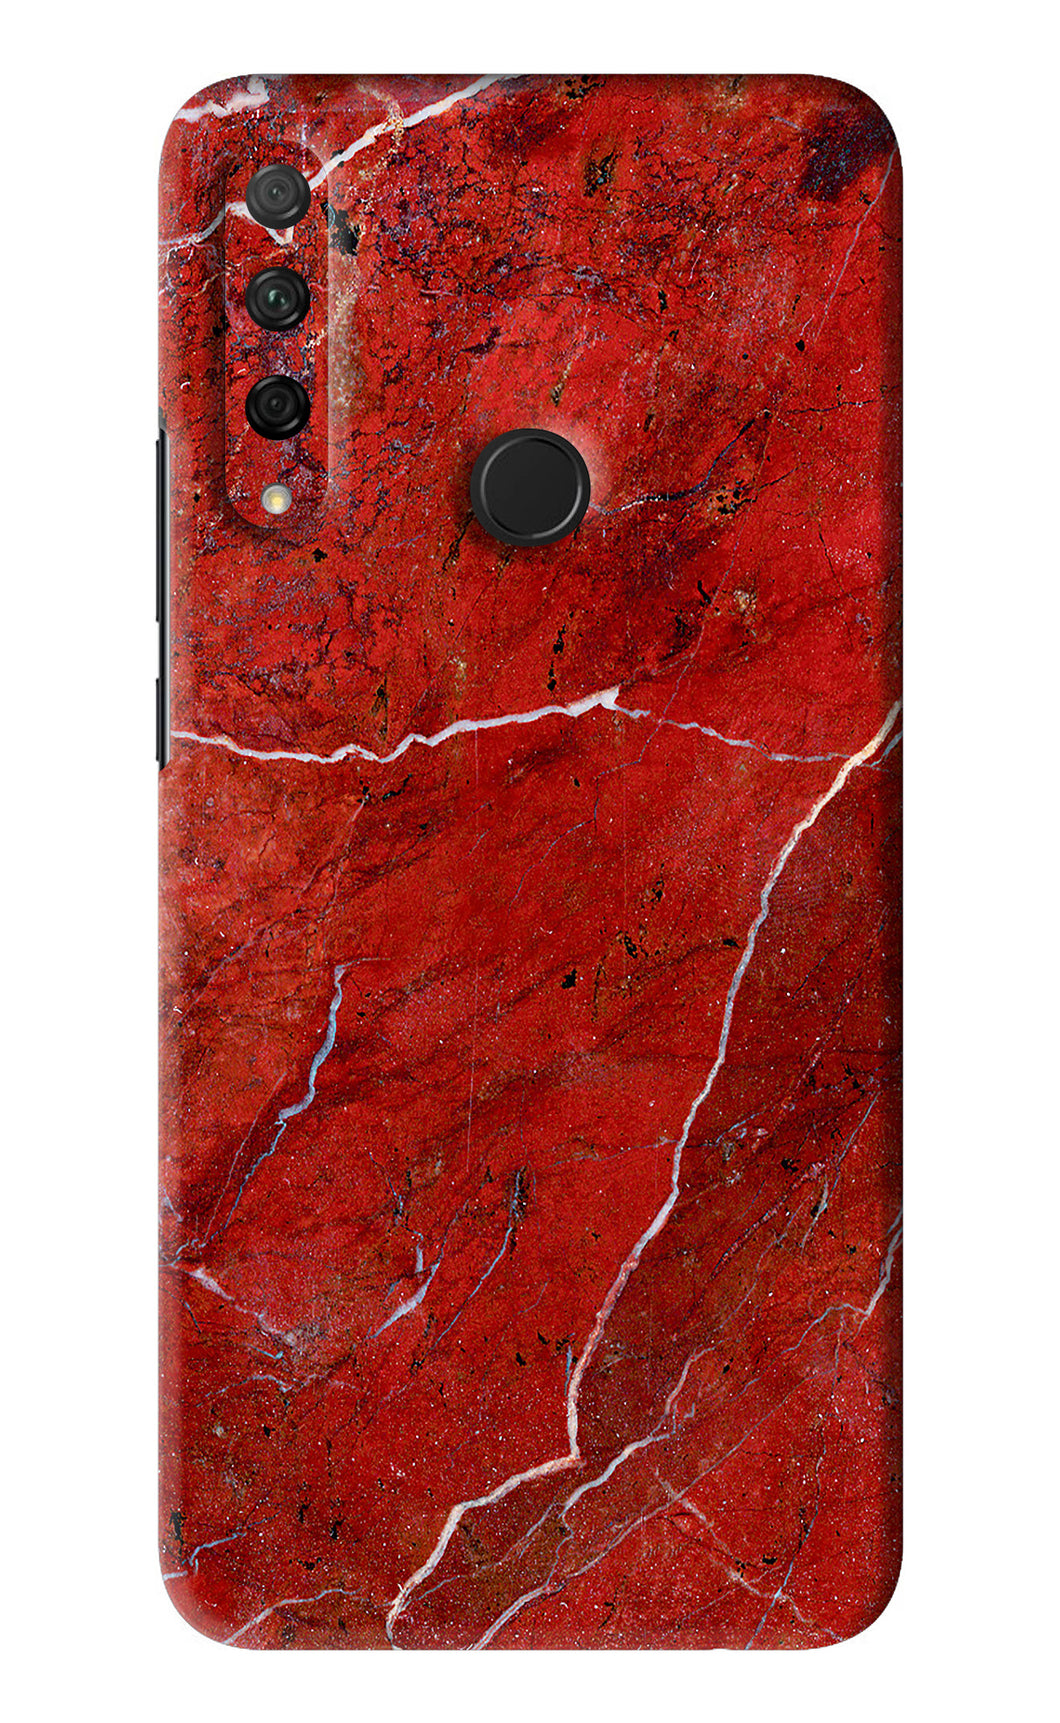 Red Marble Design Huawei Honor 9X Back Skin Wrap